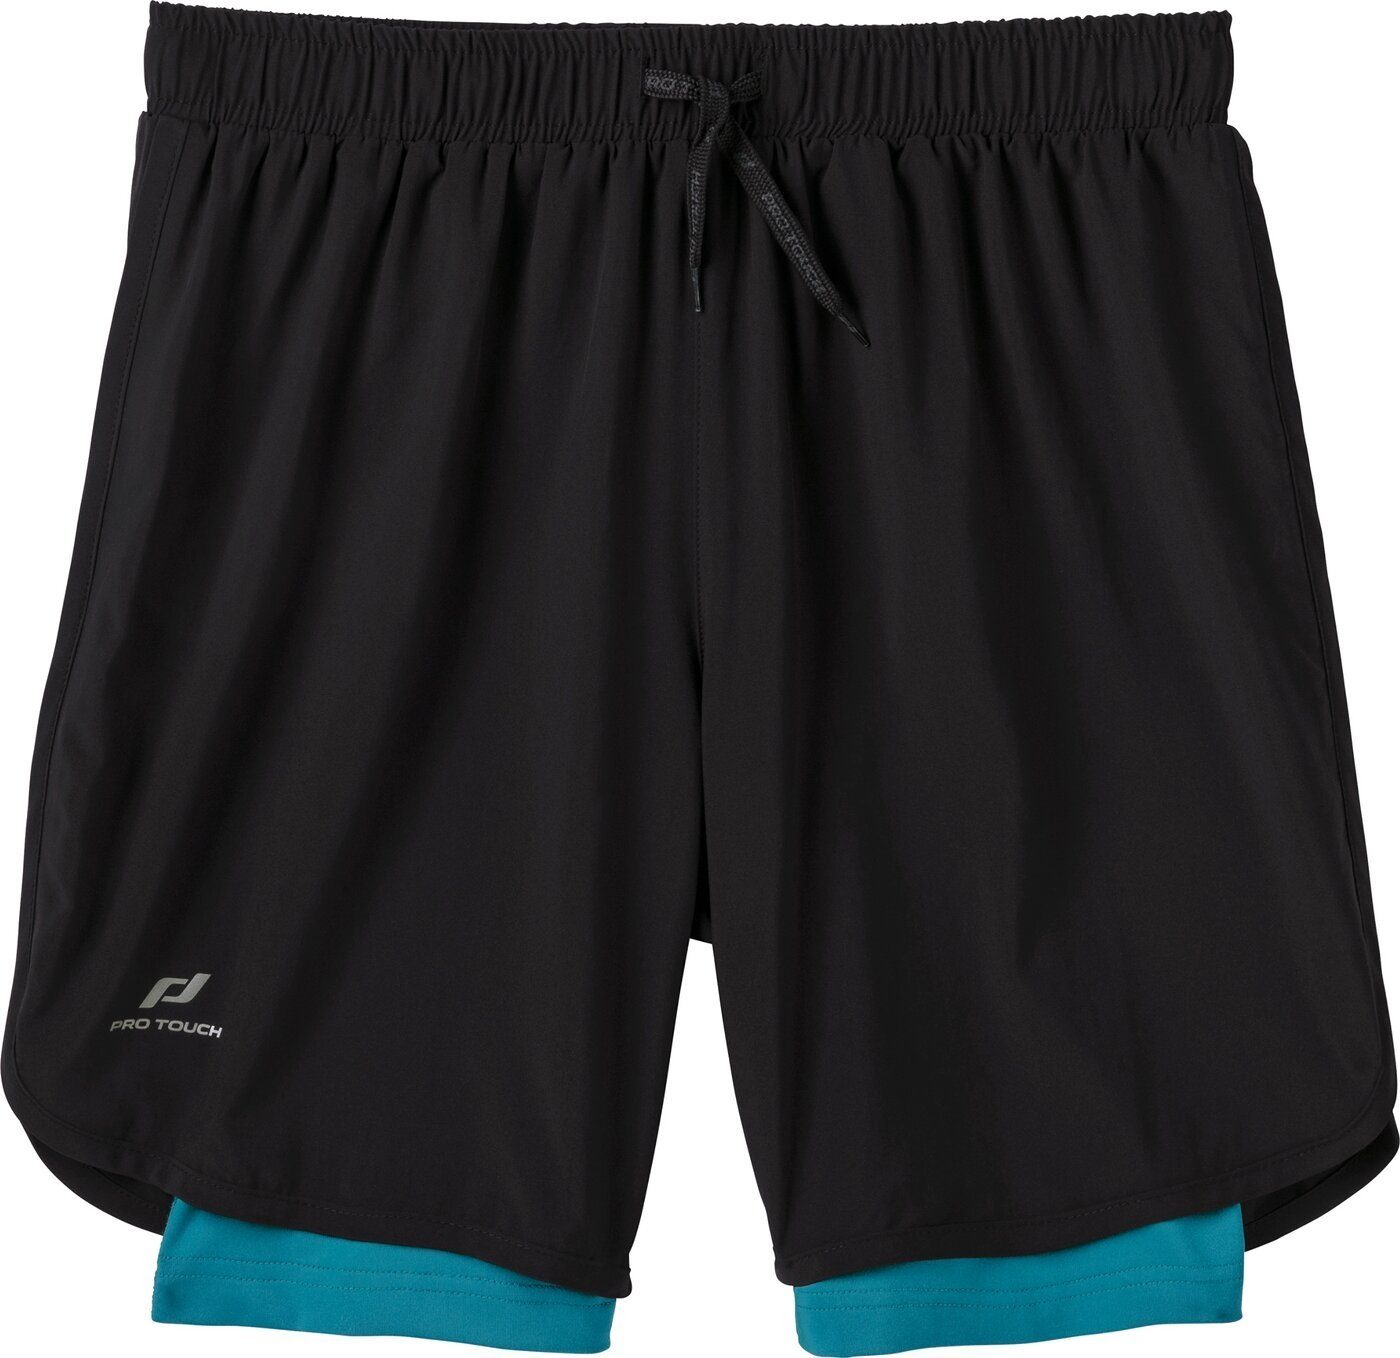 Touch Allen Shorts III Shorts Pro